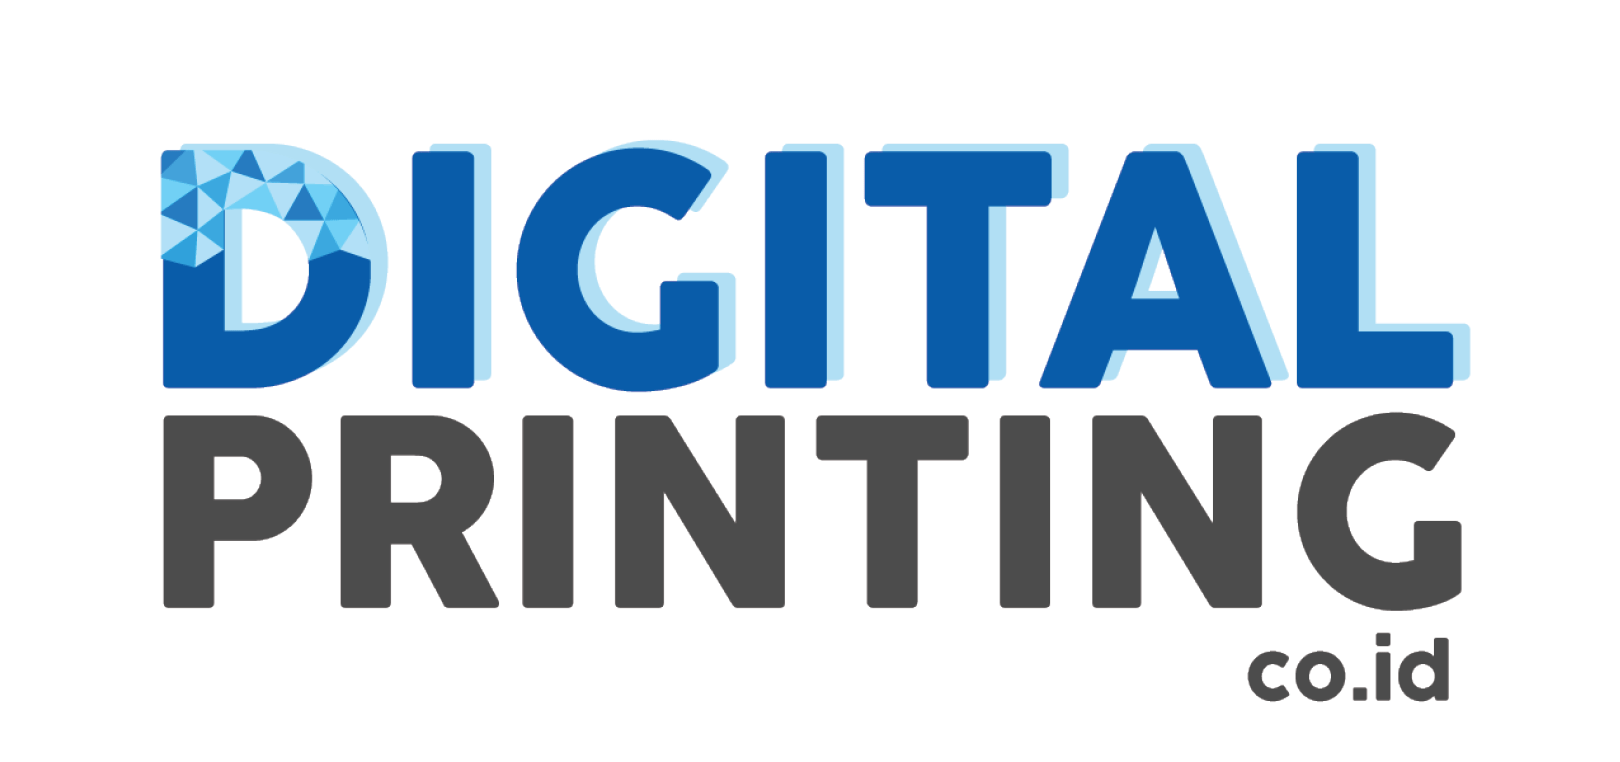 Free Publishing Logo Creator: Printing Company Logos | LogoDesign